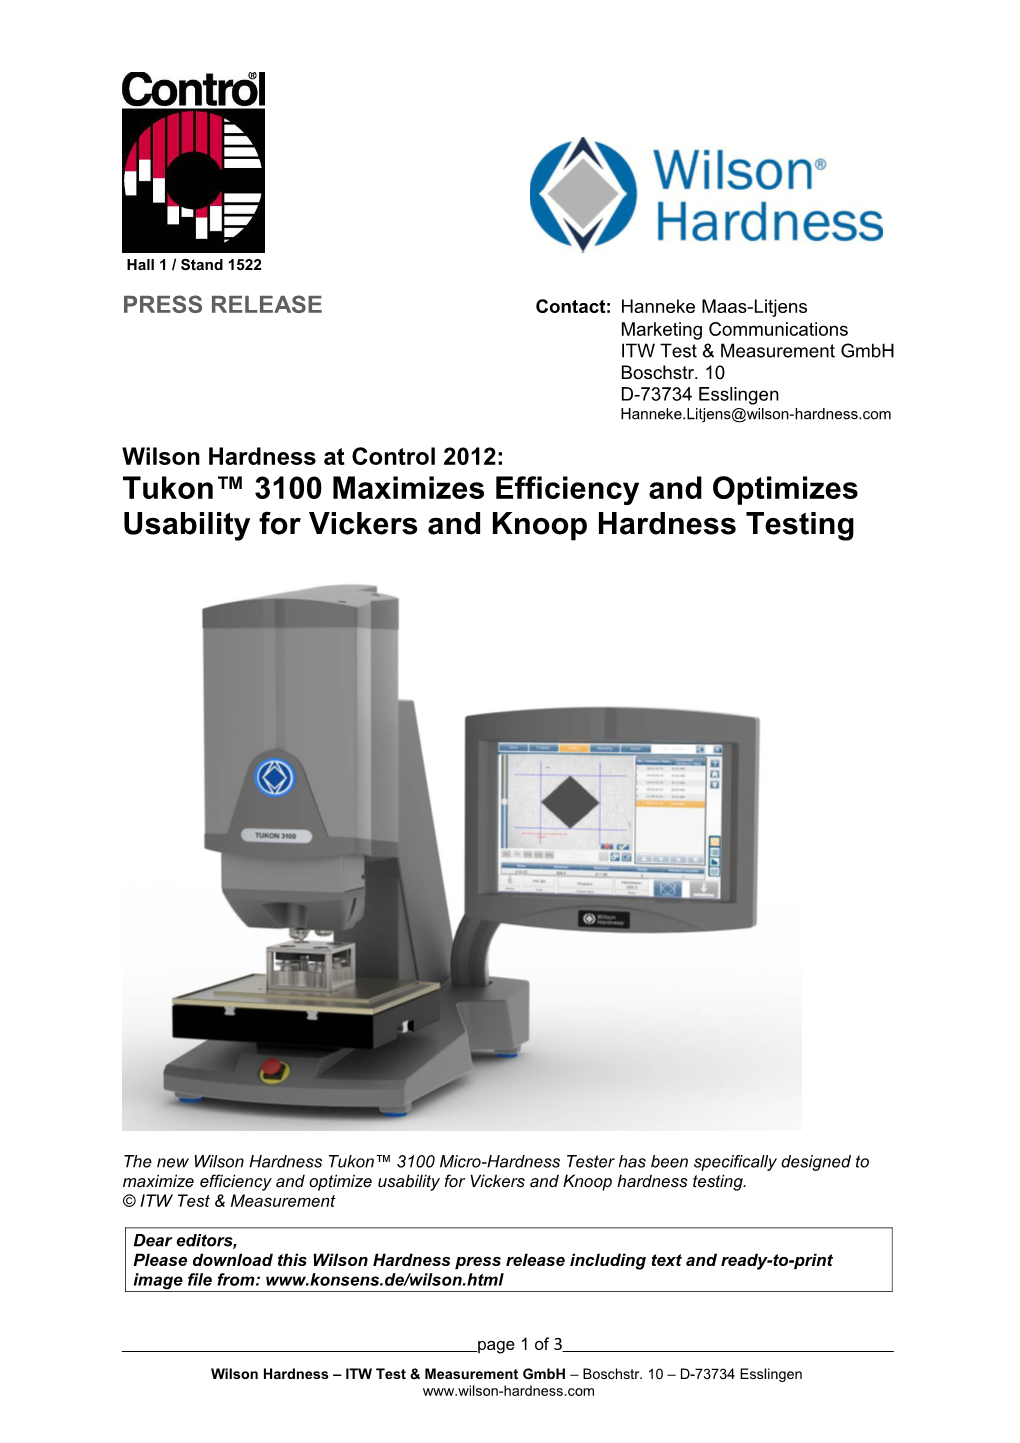 Tukon 3100 Maximizes Efficiency and Optimizes Usability for Vickersand Knoop Hardness Testing